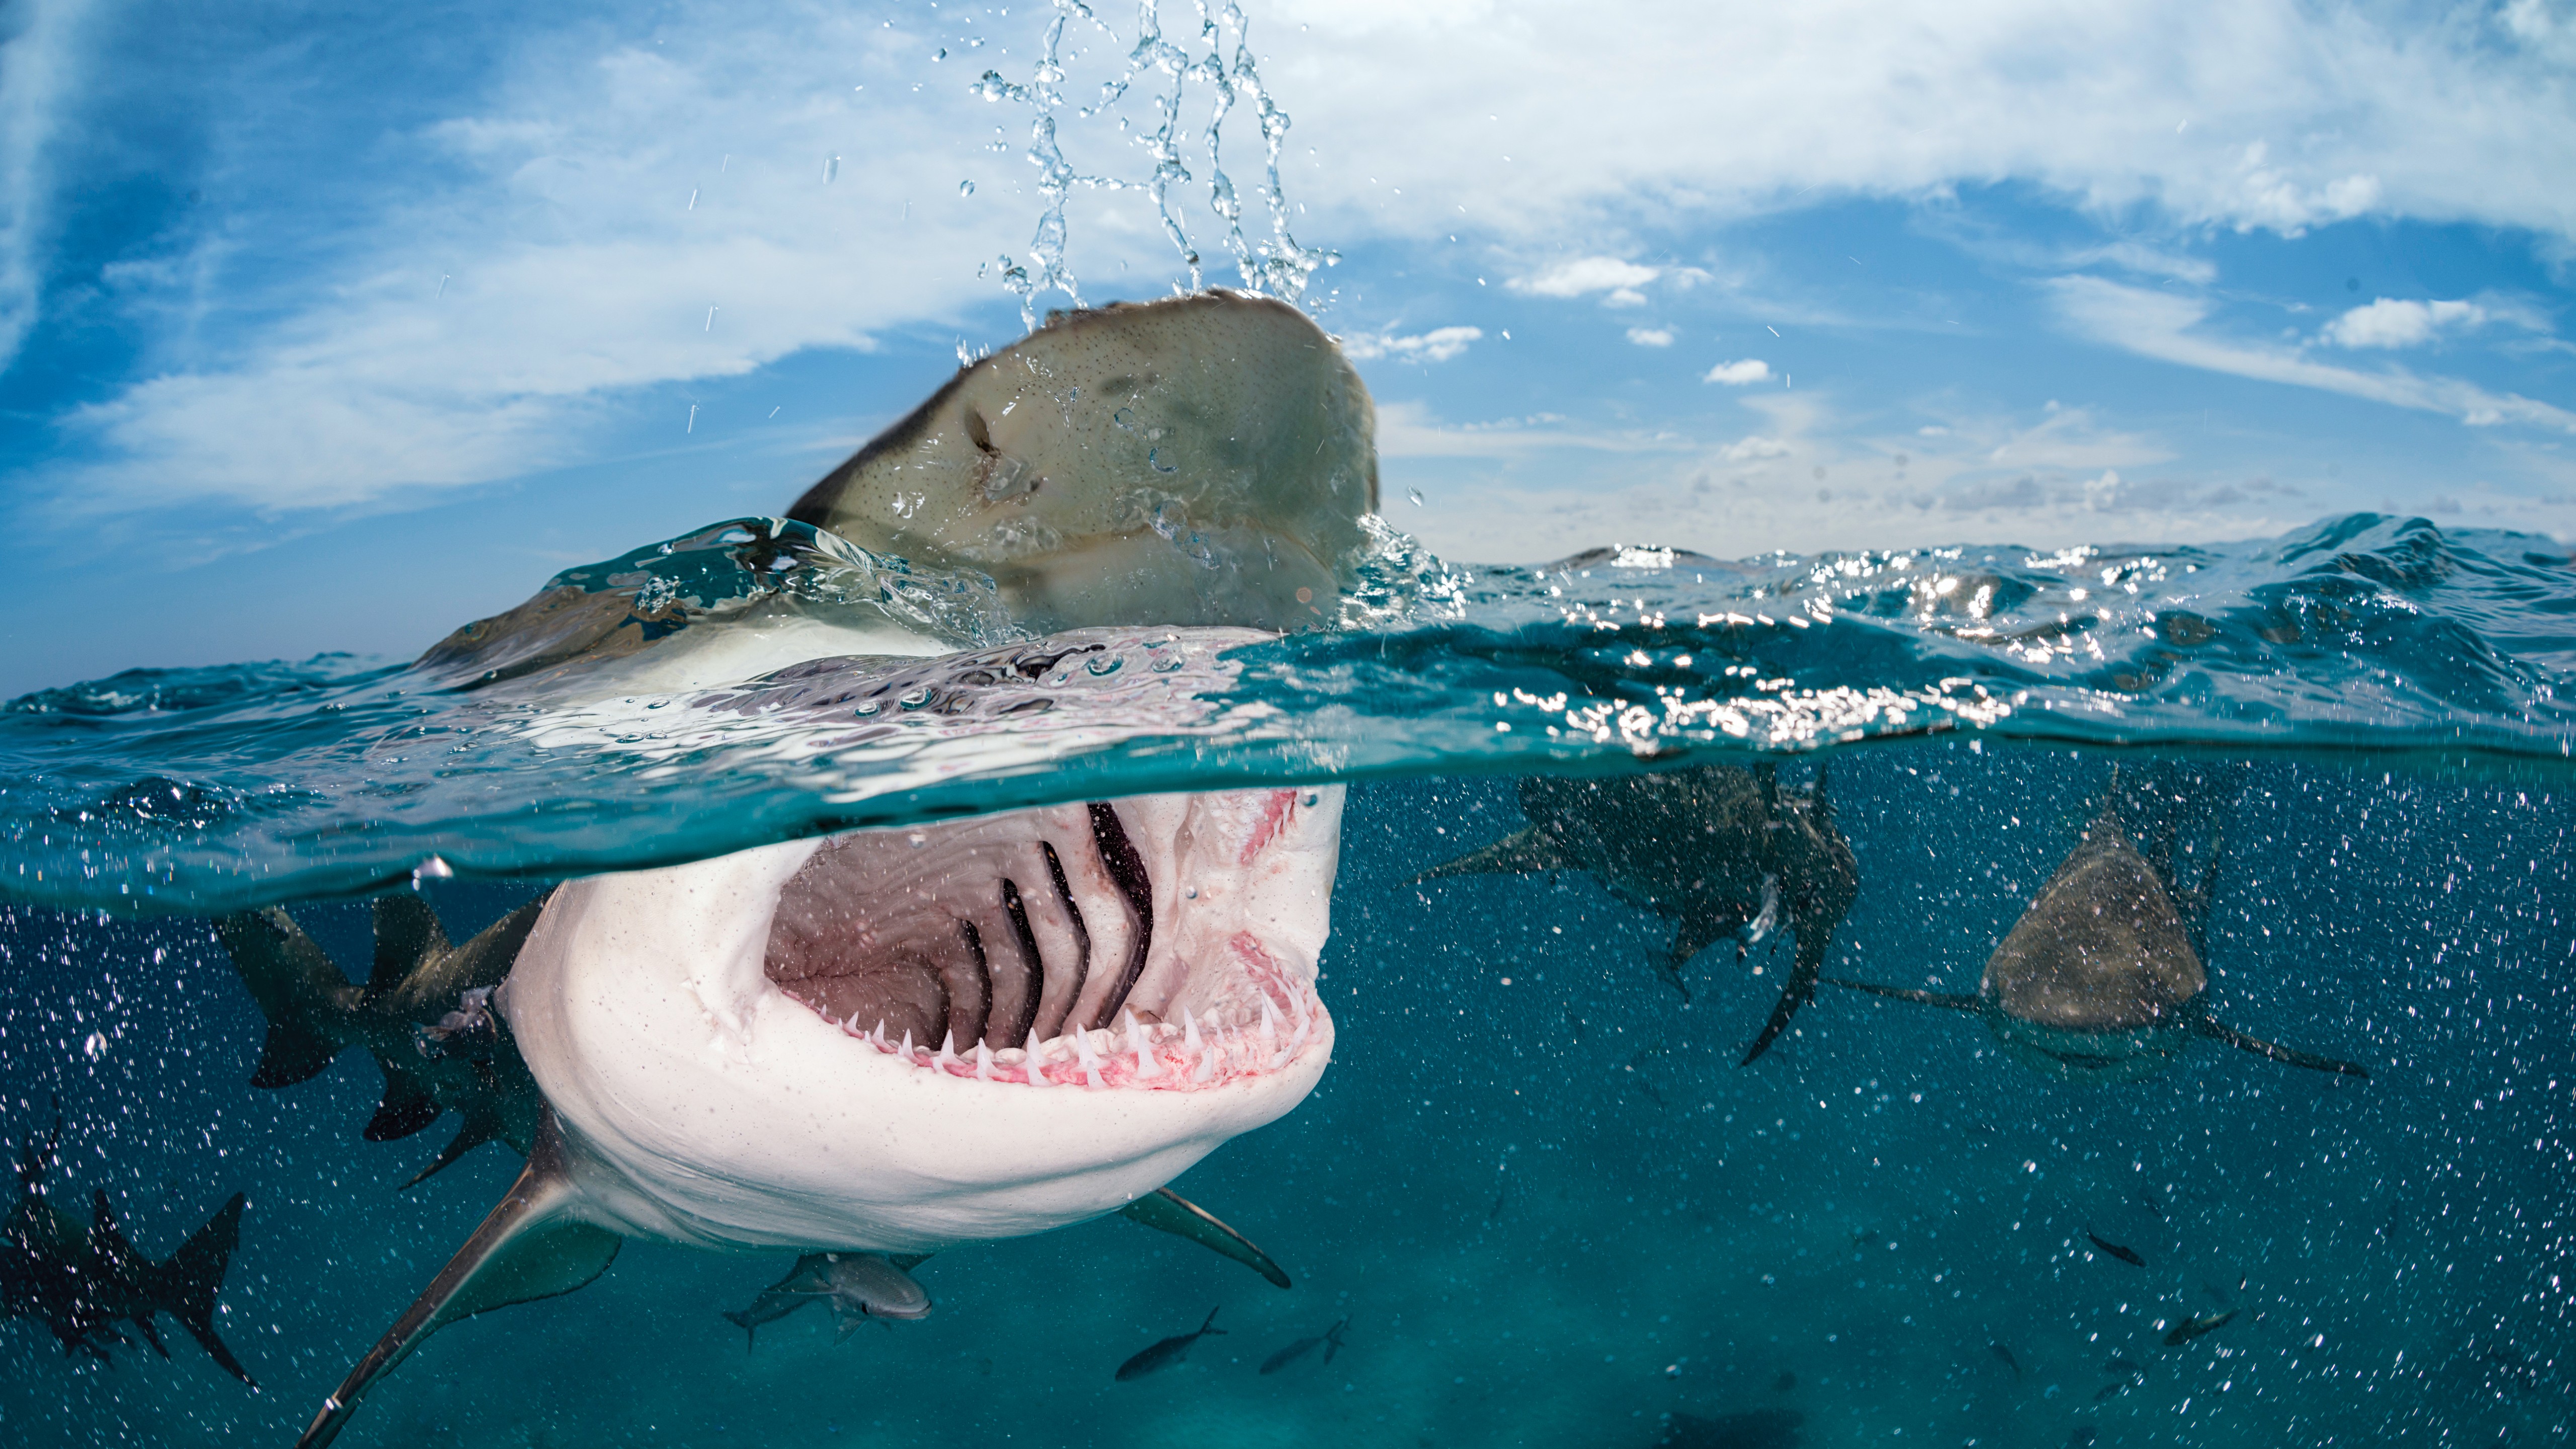 Wallpaper Shark 5k 4k 8k Indian Caribbean Atlantic